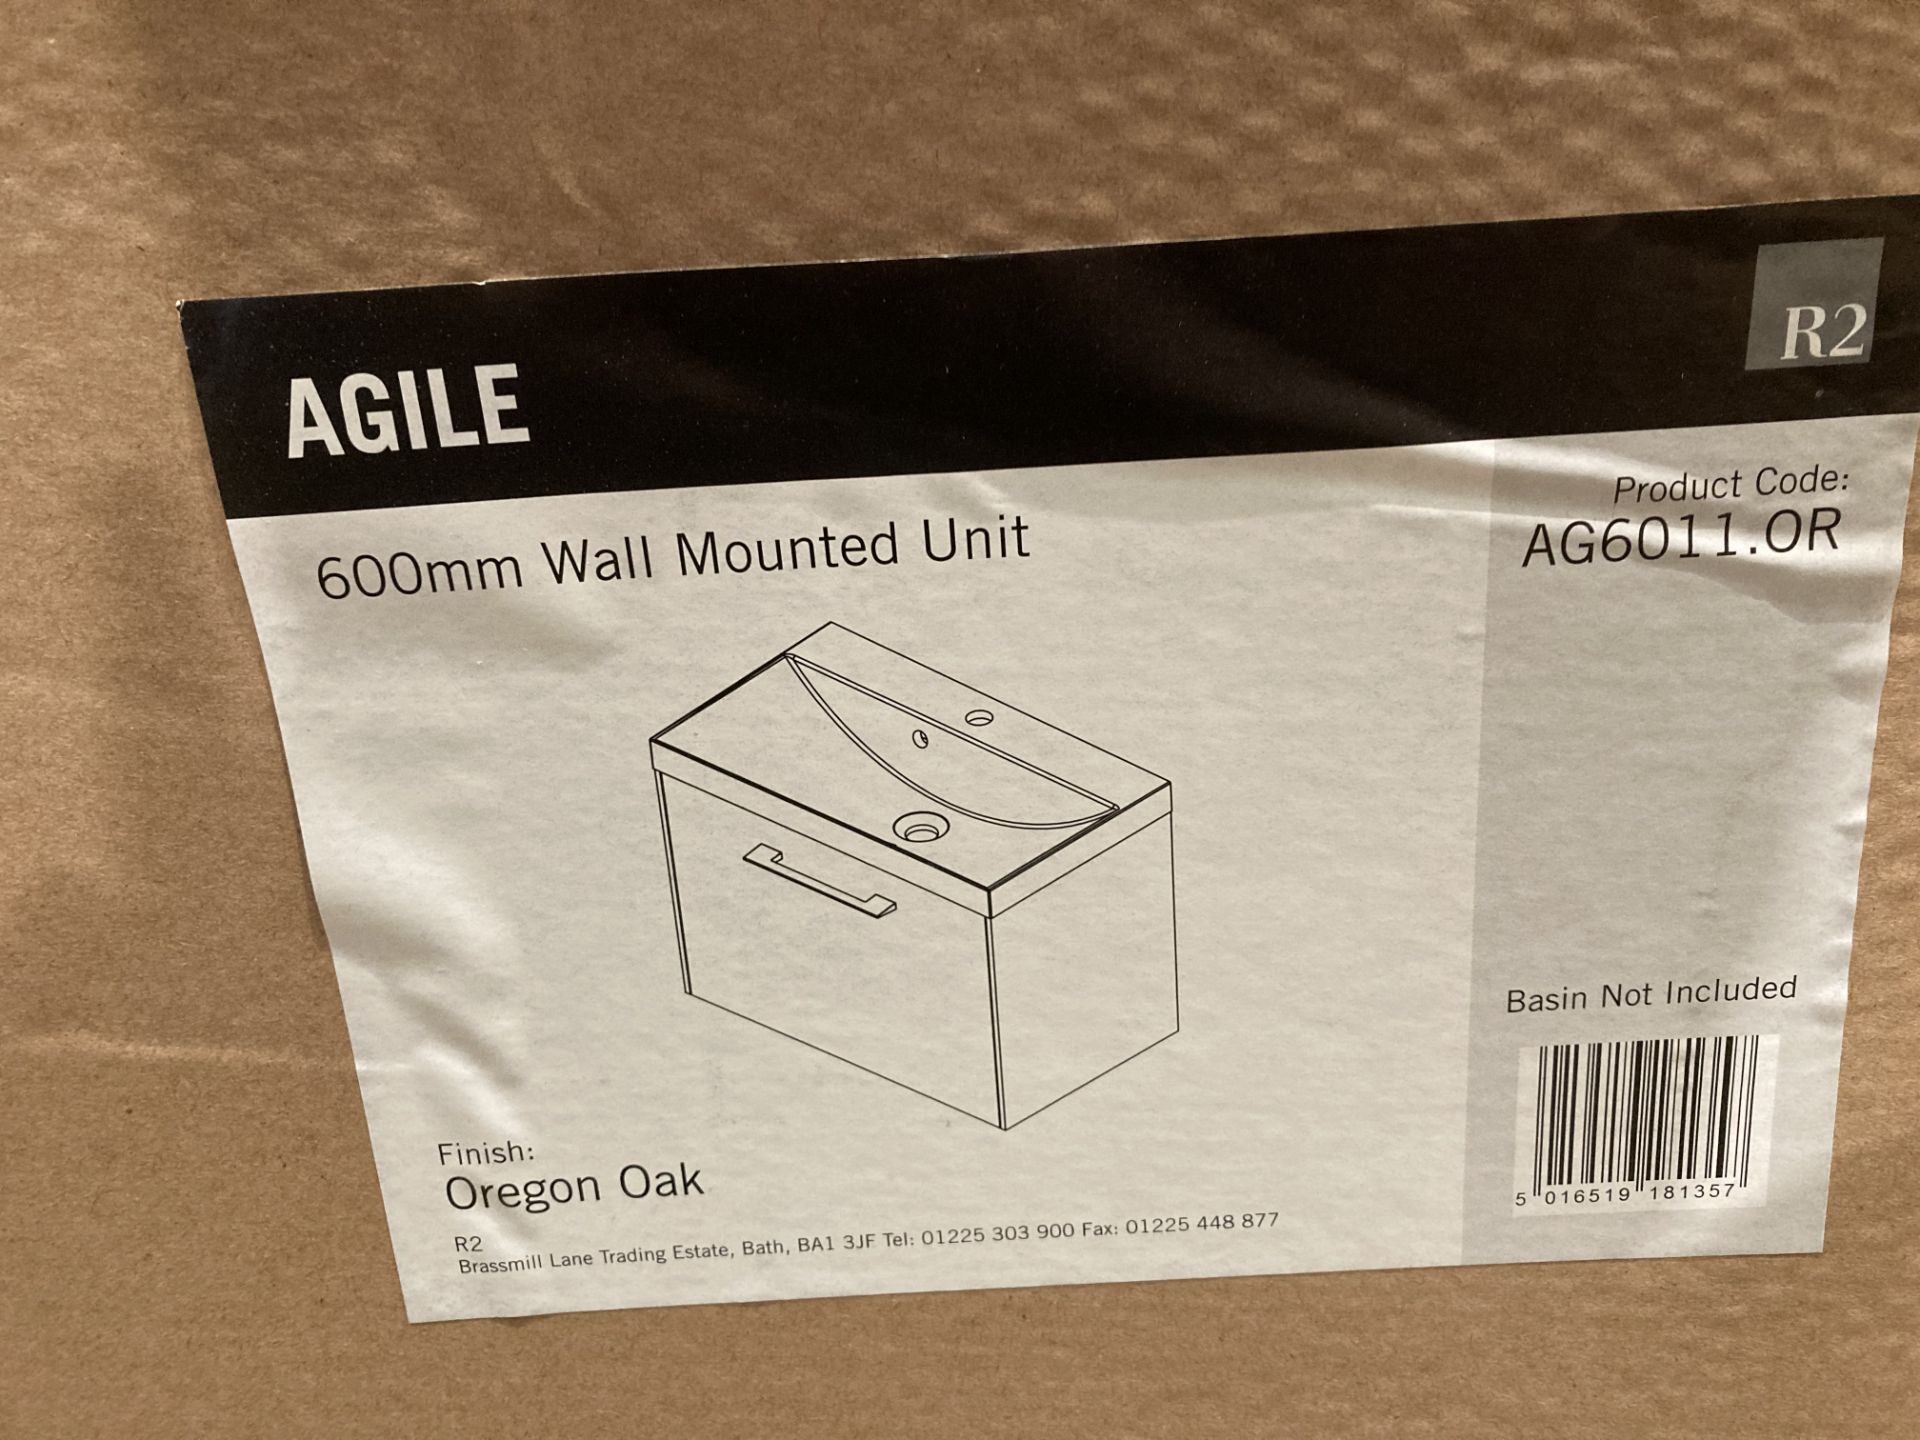 Agile 600mm wall mounted unit in Oregan Oak (new boxed) (saleroom location: RB) - Image 2 of 2